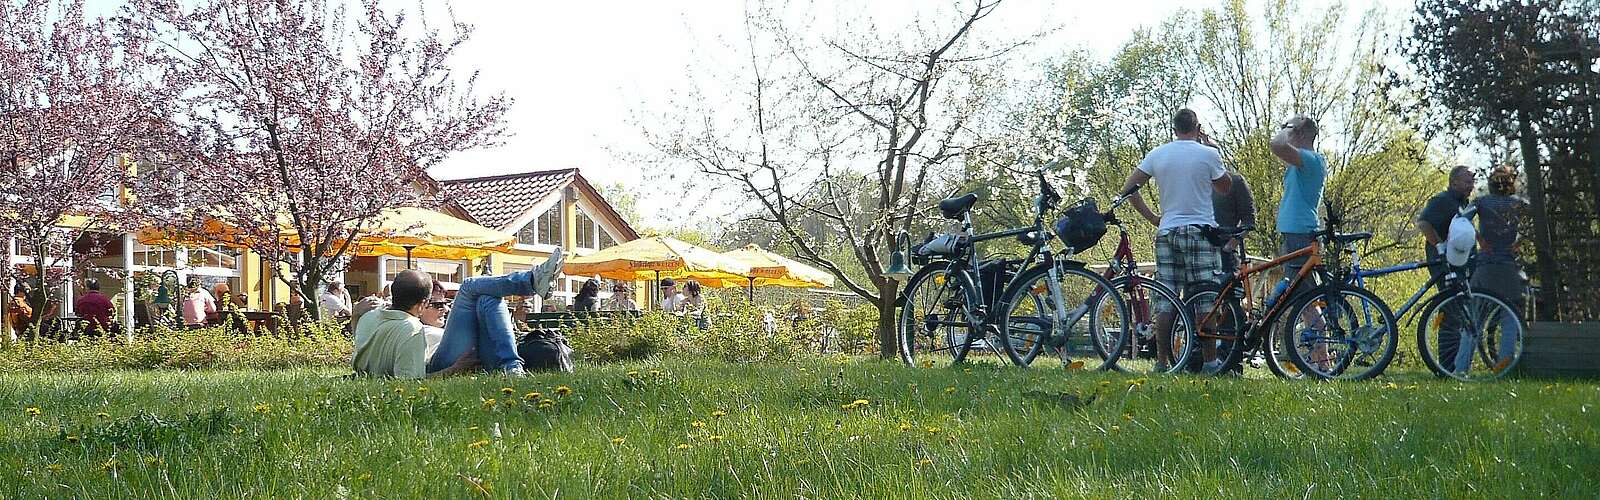 Zwischenstopp mit dem Fahrrad in Petzow,
        
    

        Foto: Fotograf / Lizenz - Media Import/Andrea Hofmann